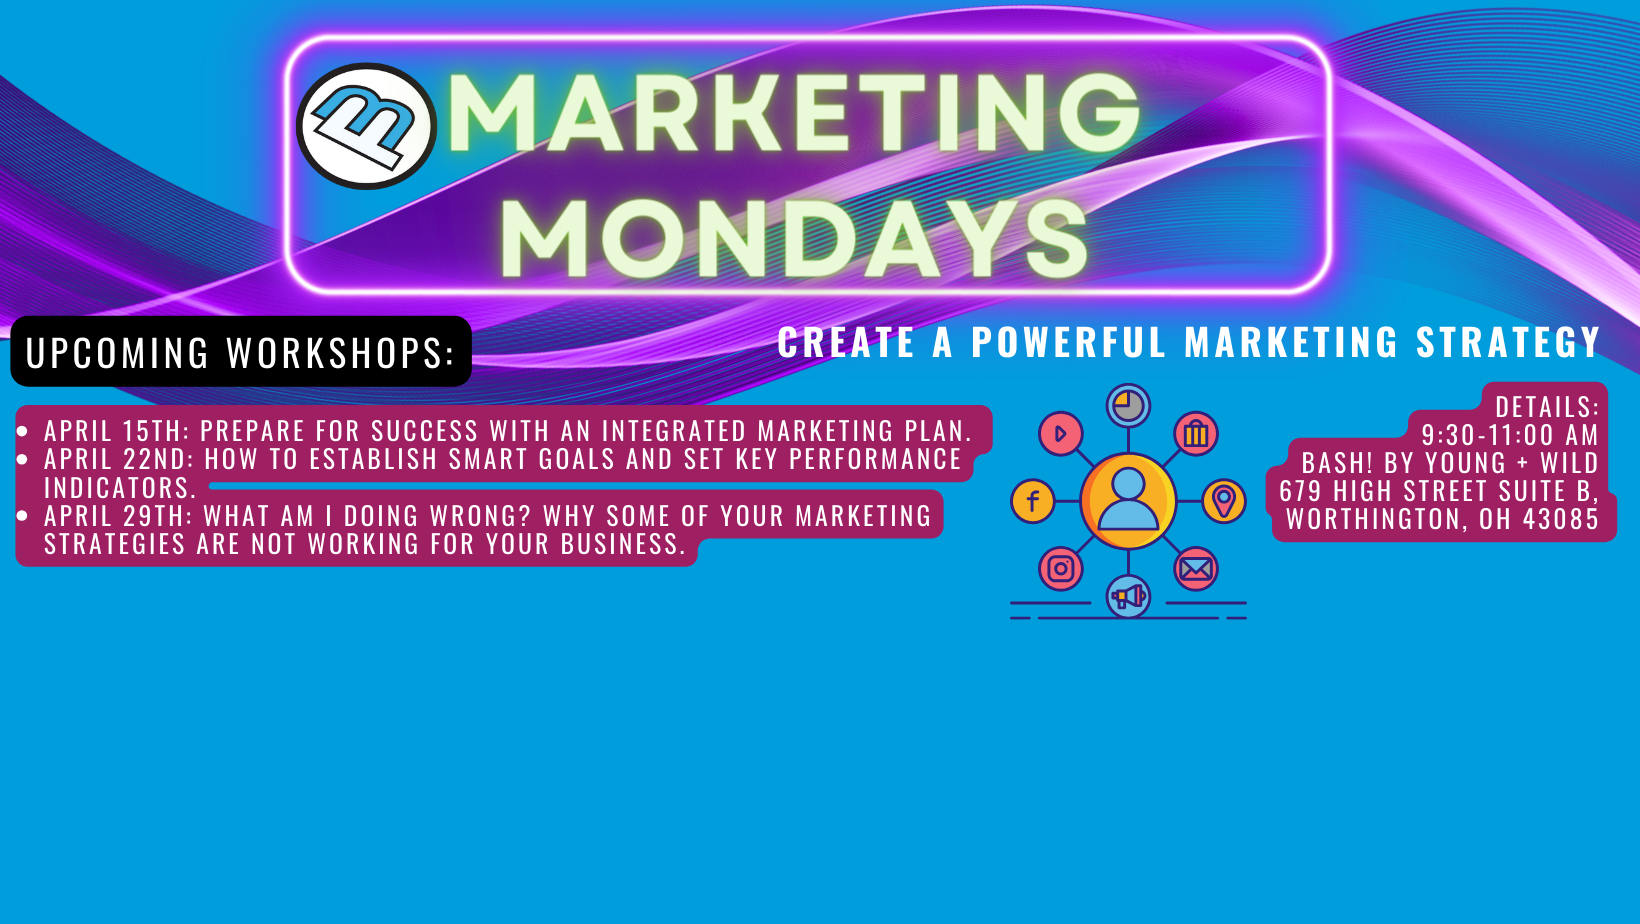 Marketing Mondays Workshops